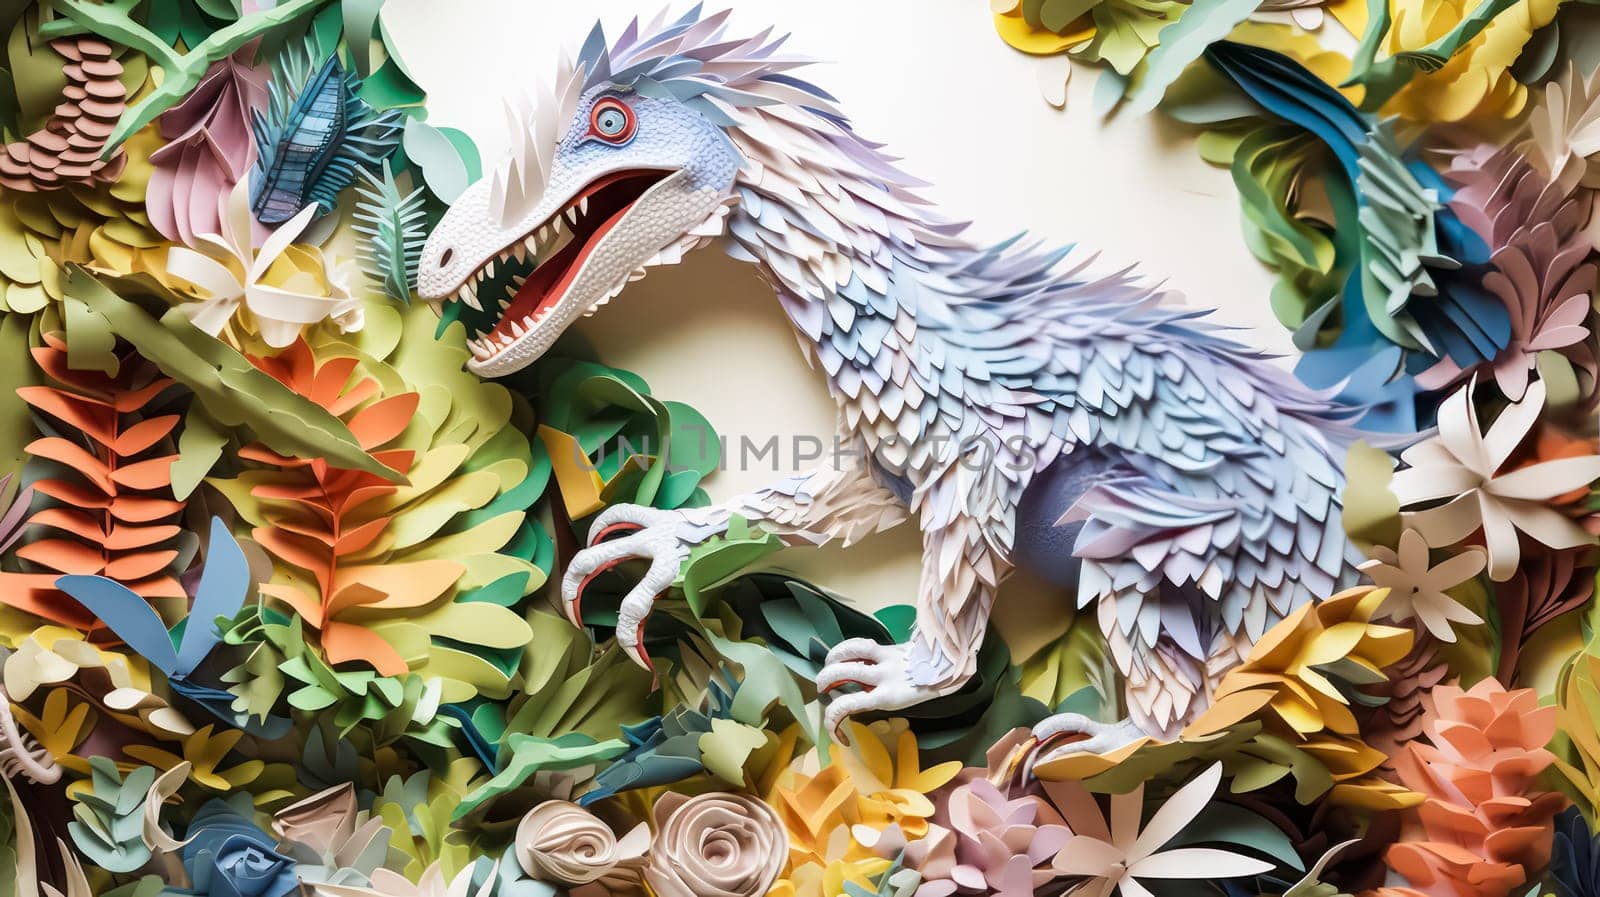 An intricate 3D paper model of a ferocious Tyrannosaurus rex by Alla_Morozova93